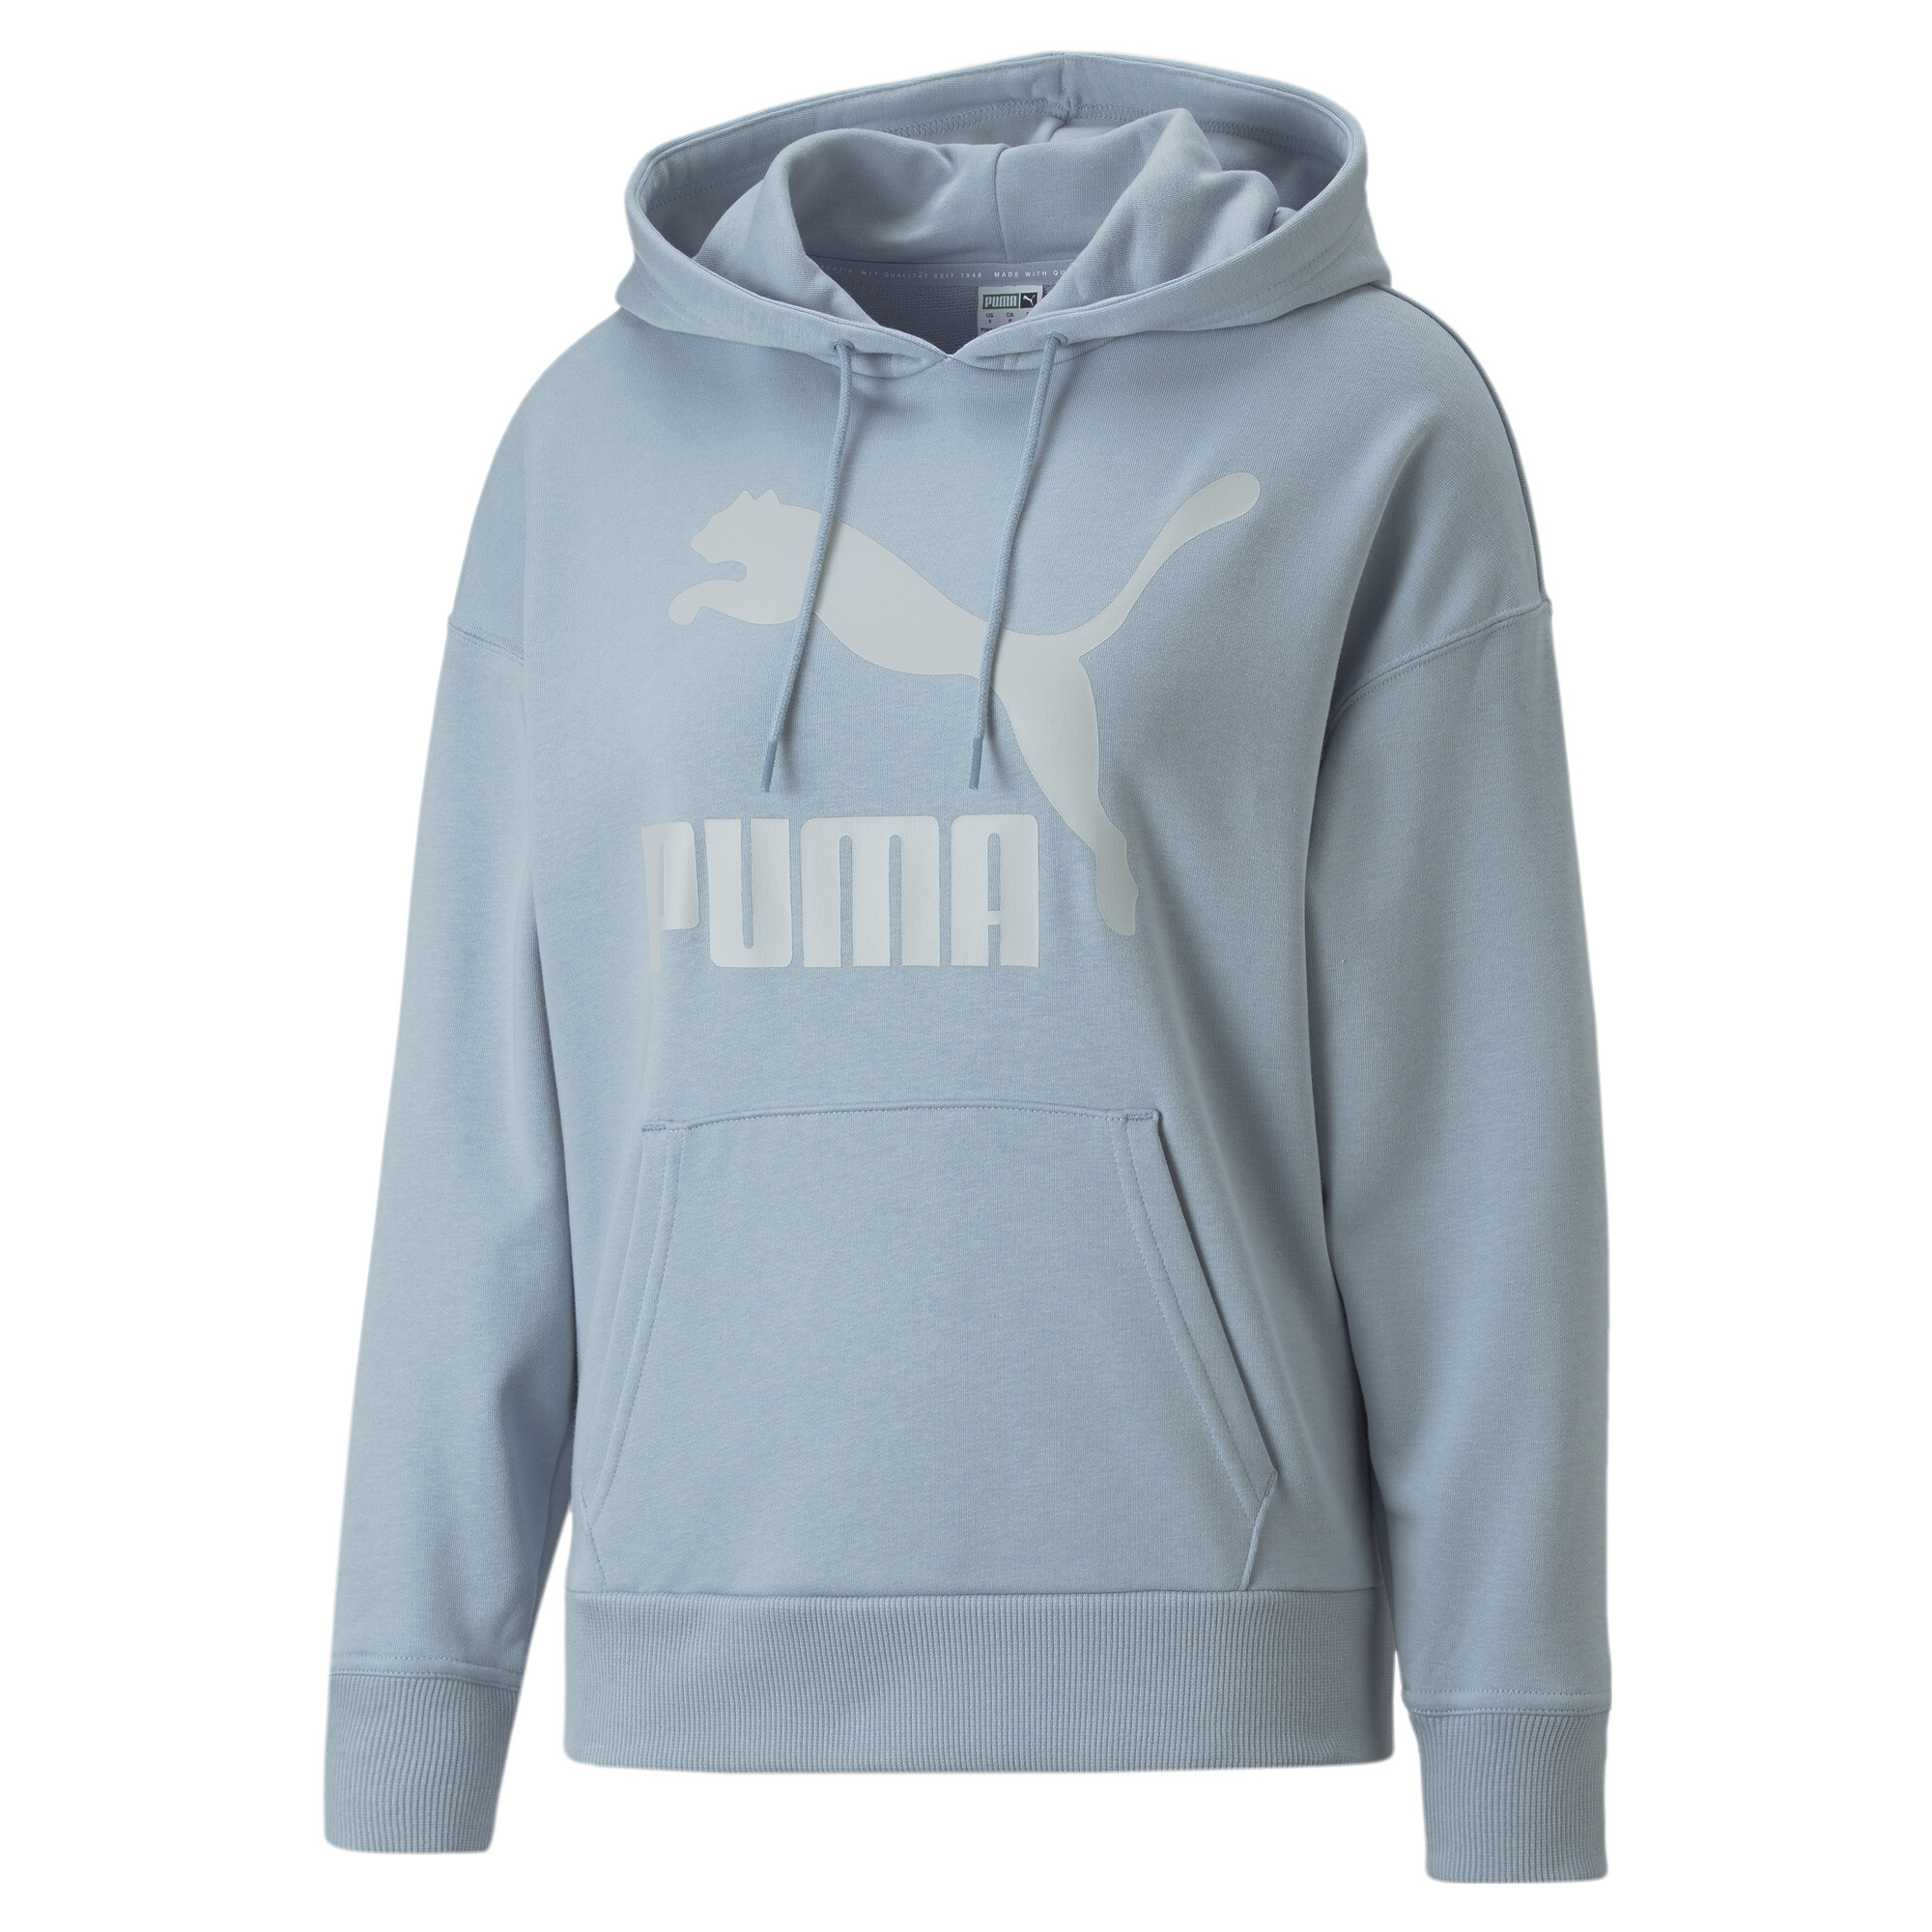 PUMA Women's Classics Logo Hoodie | eBay